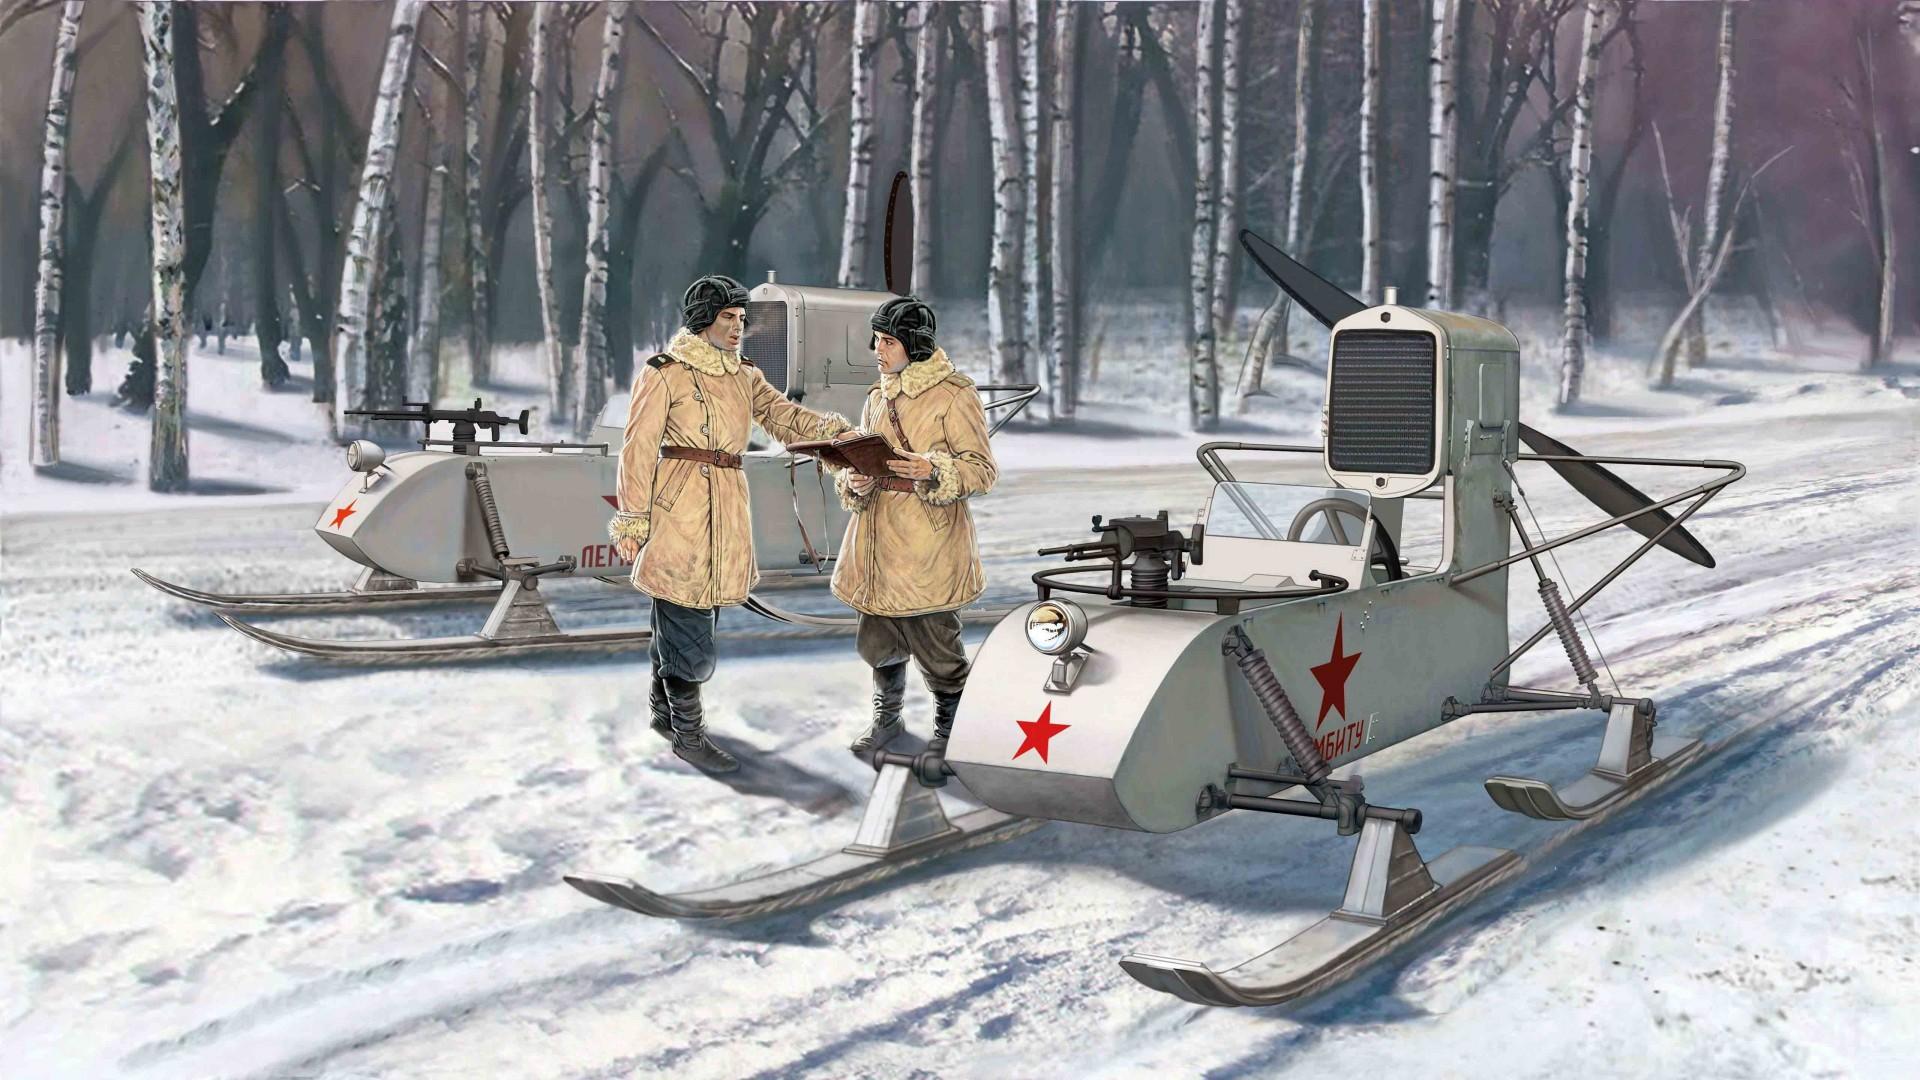 TGIF: Military snowmobile patrol